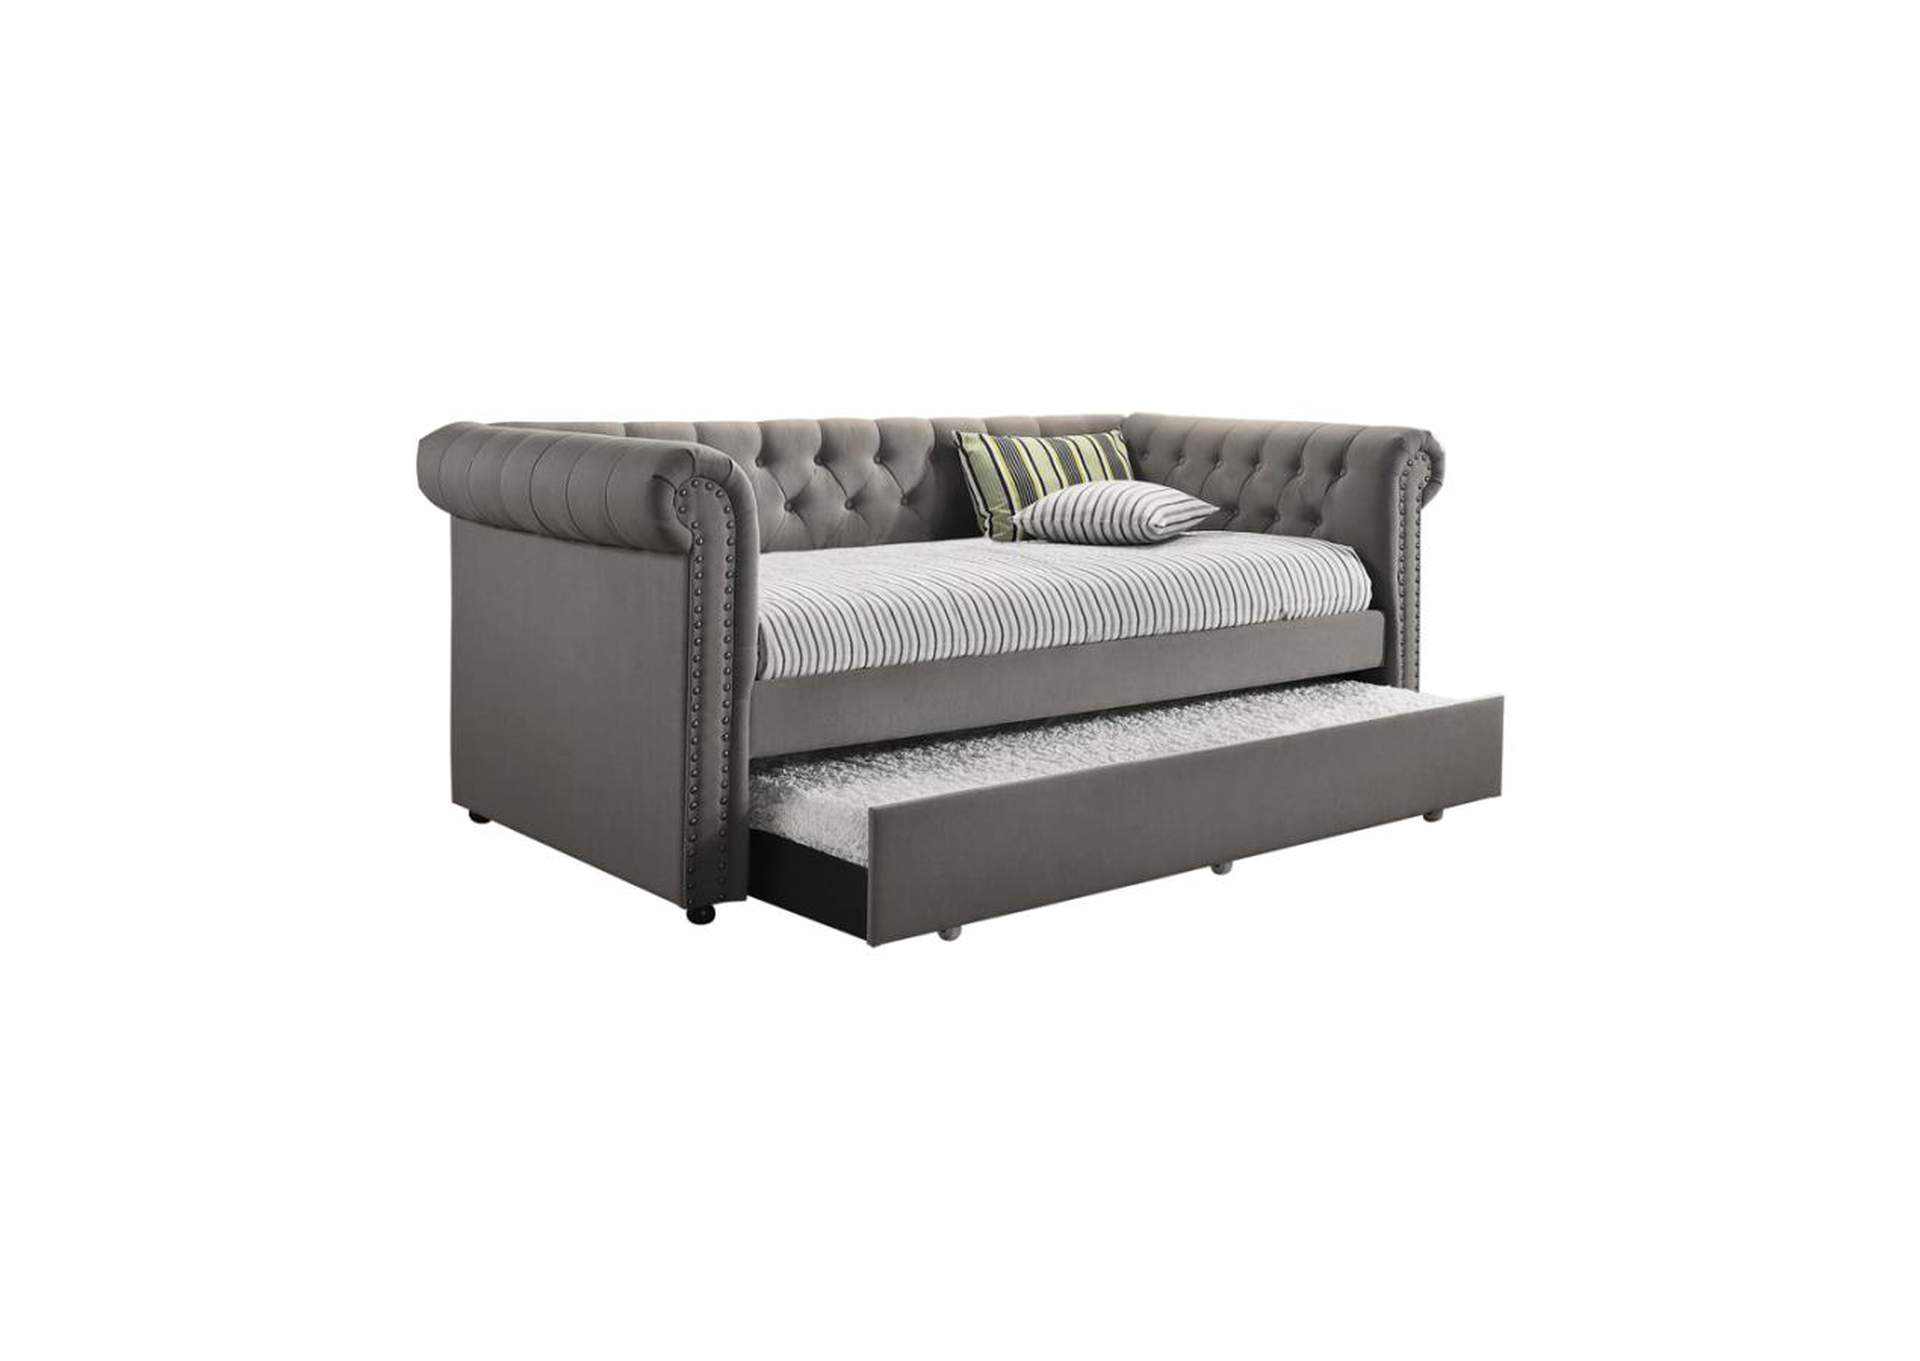 Kepner Tufted Upholstered Daybed Grey With Trundle,Coaster Furniture